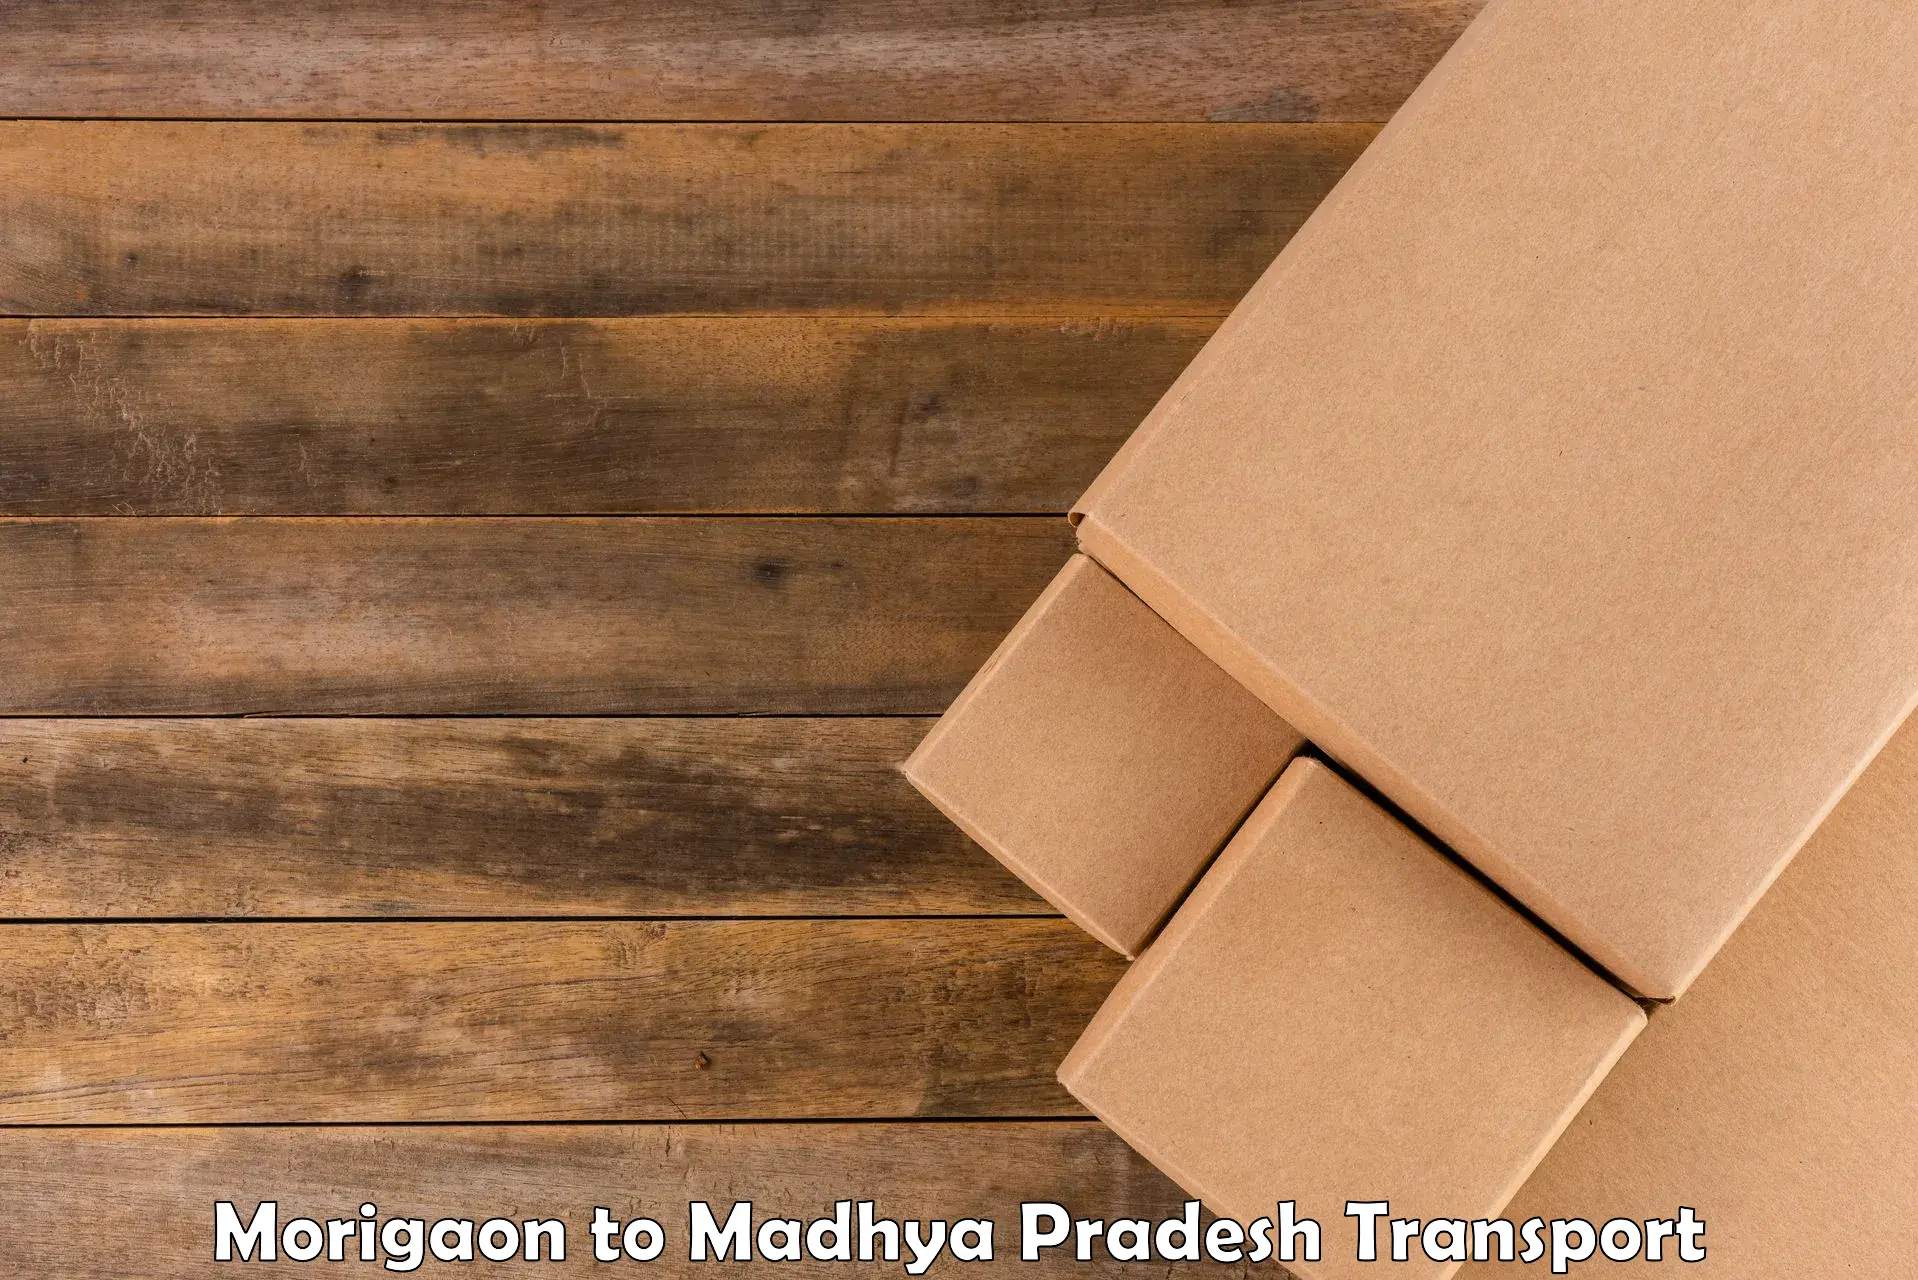 Daily parcel service transport in Morigaon to Ashoknagar